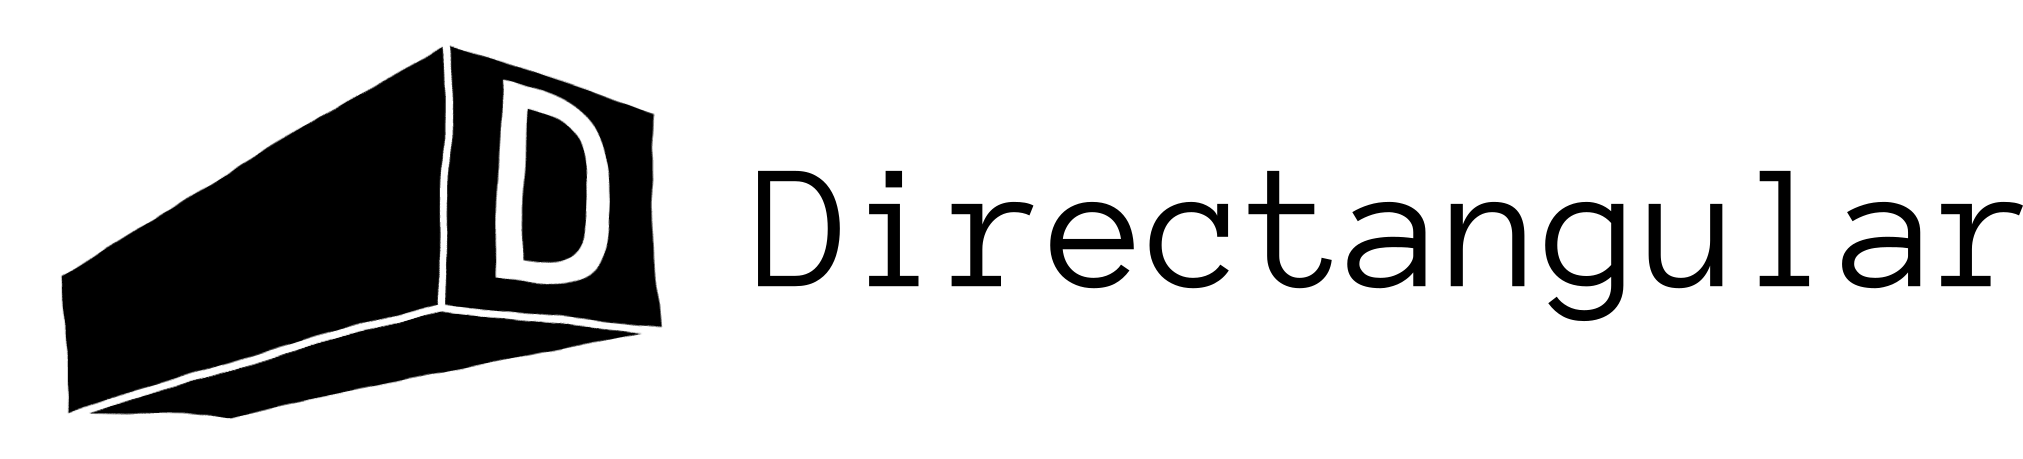 Directangular Logo